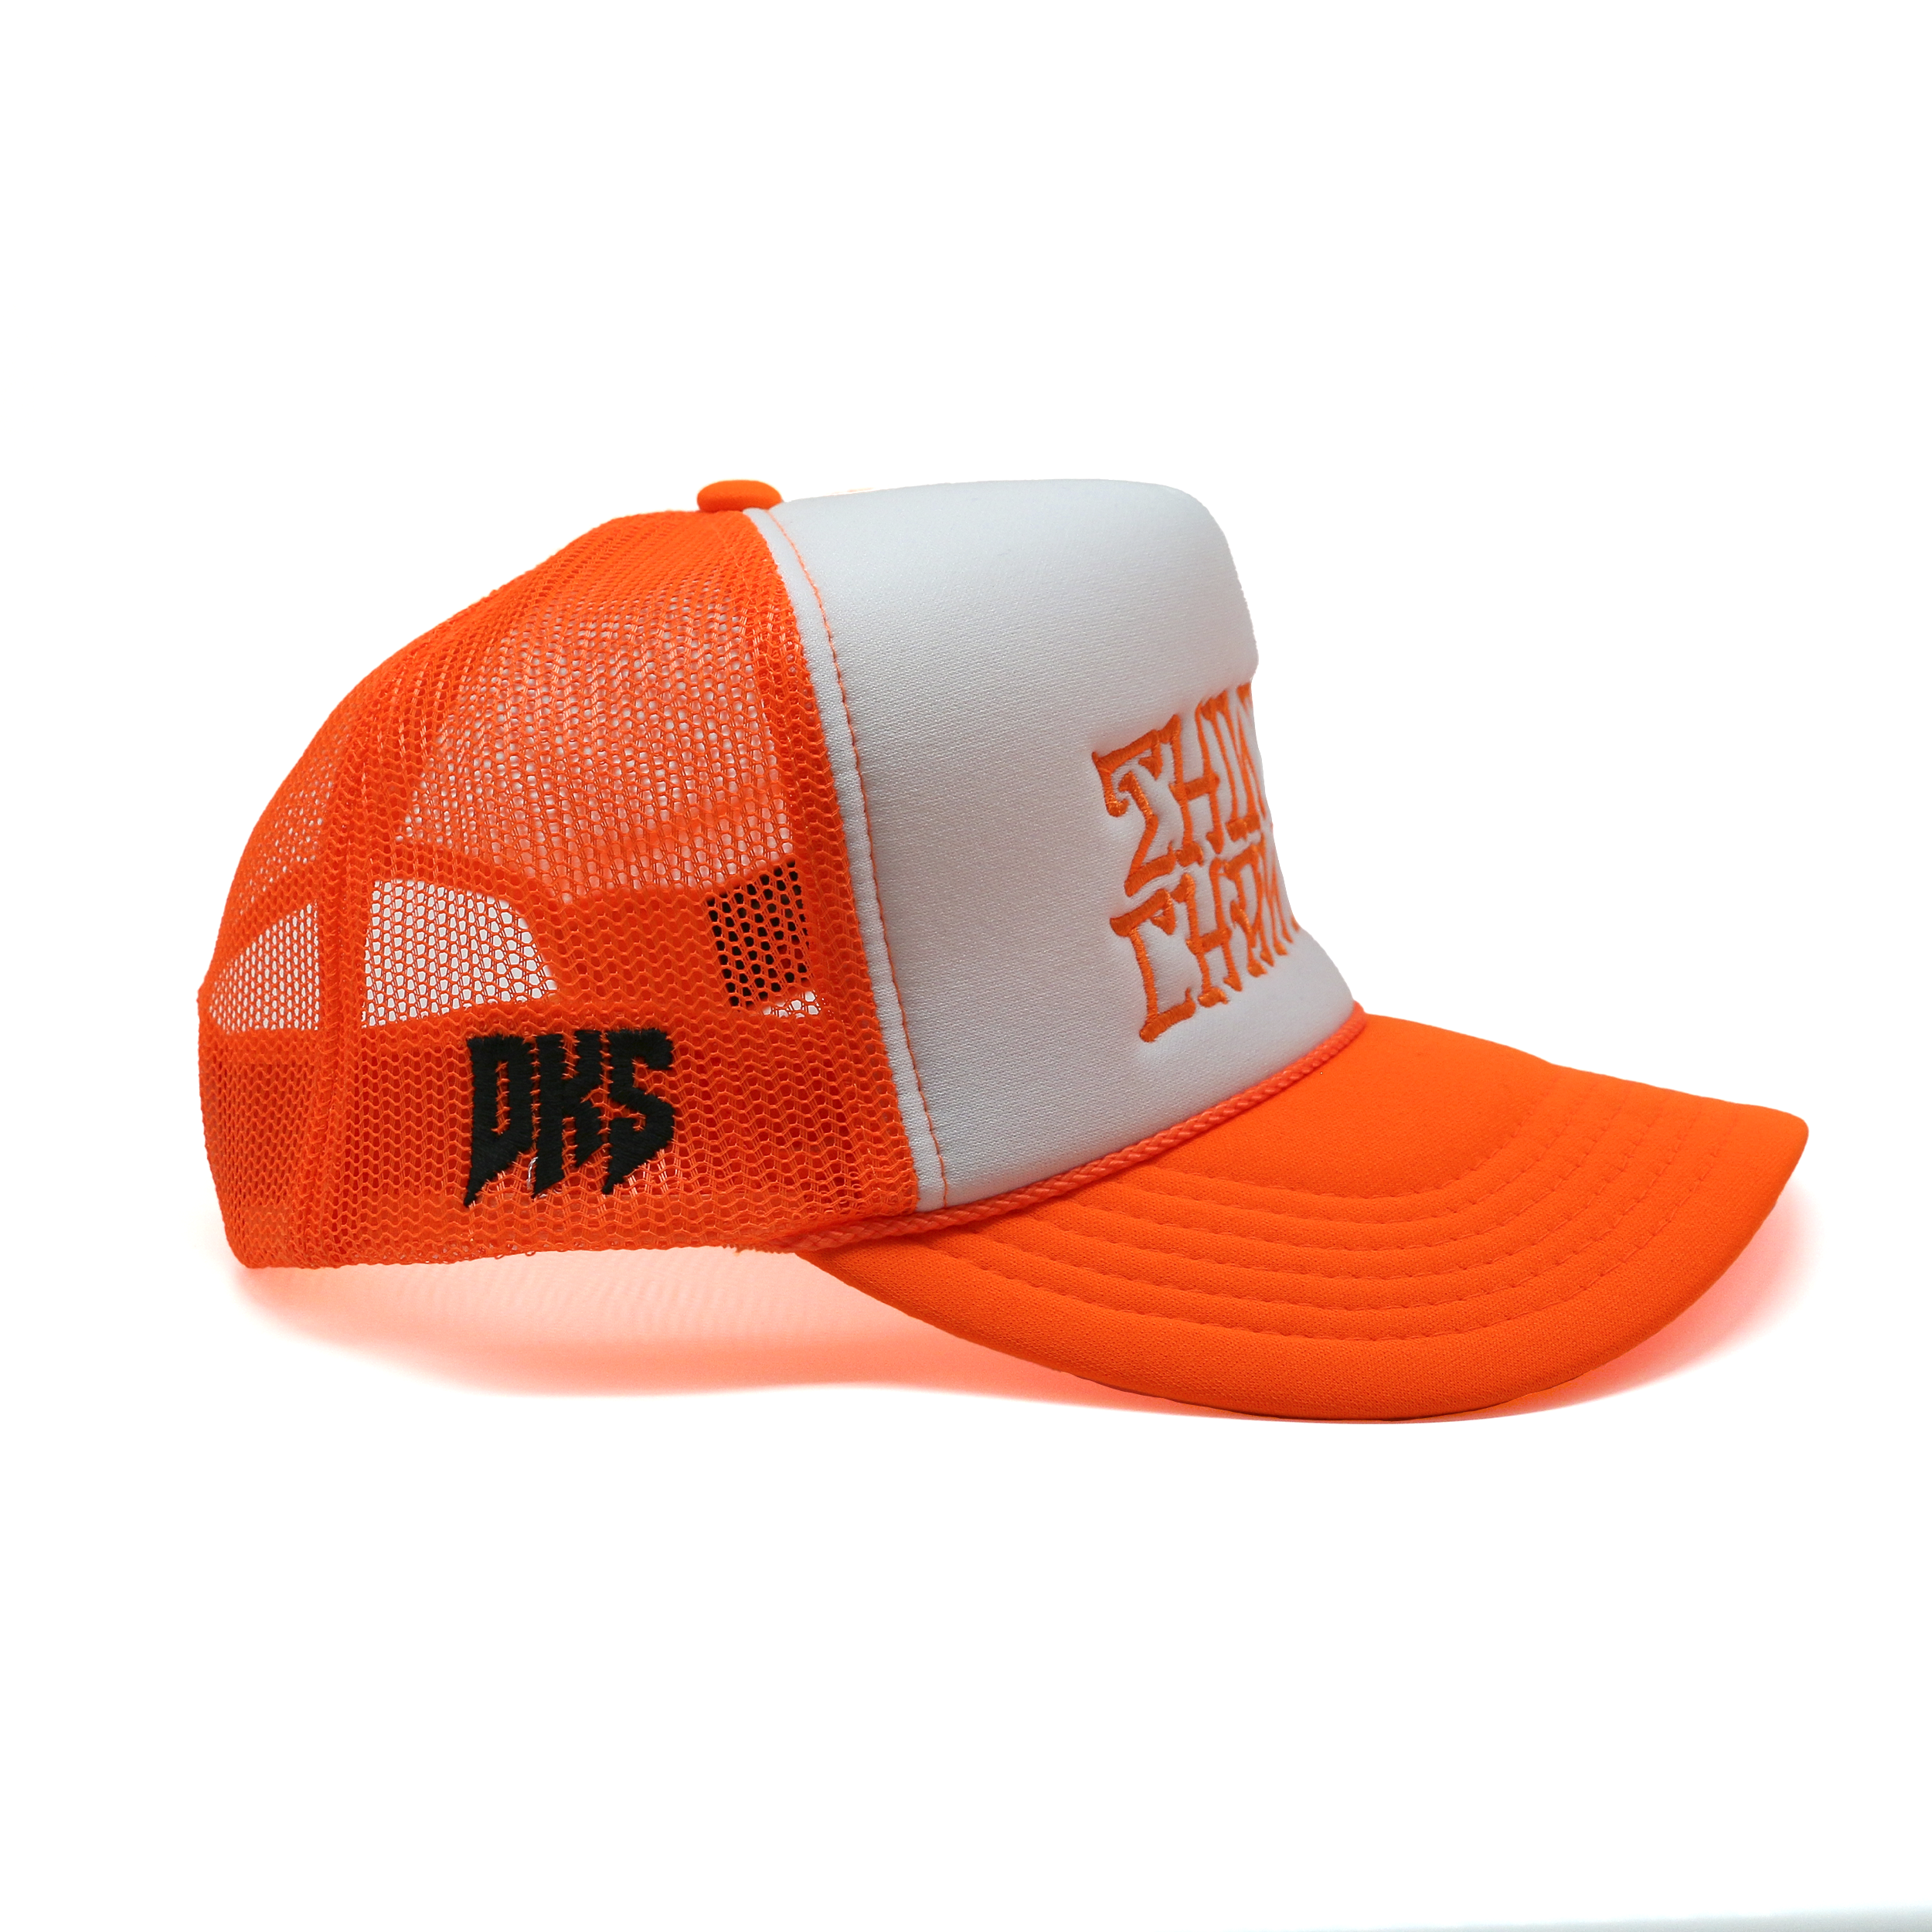 DKS "Things Change" Trucker Hat (Orange/White/Orange)